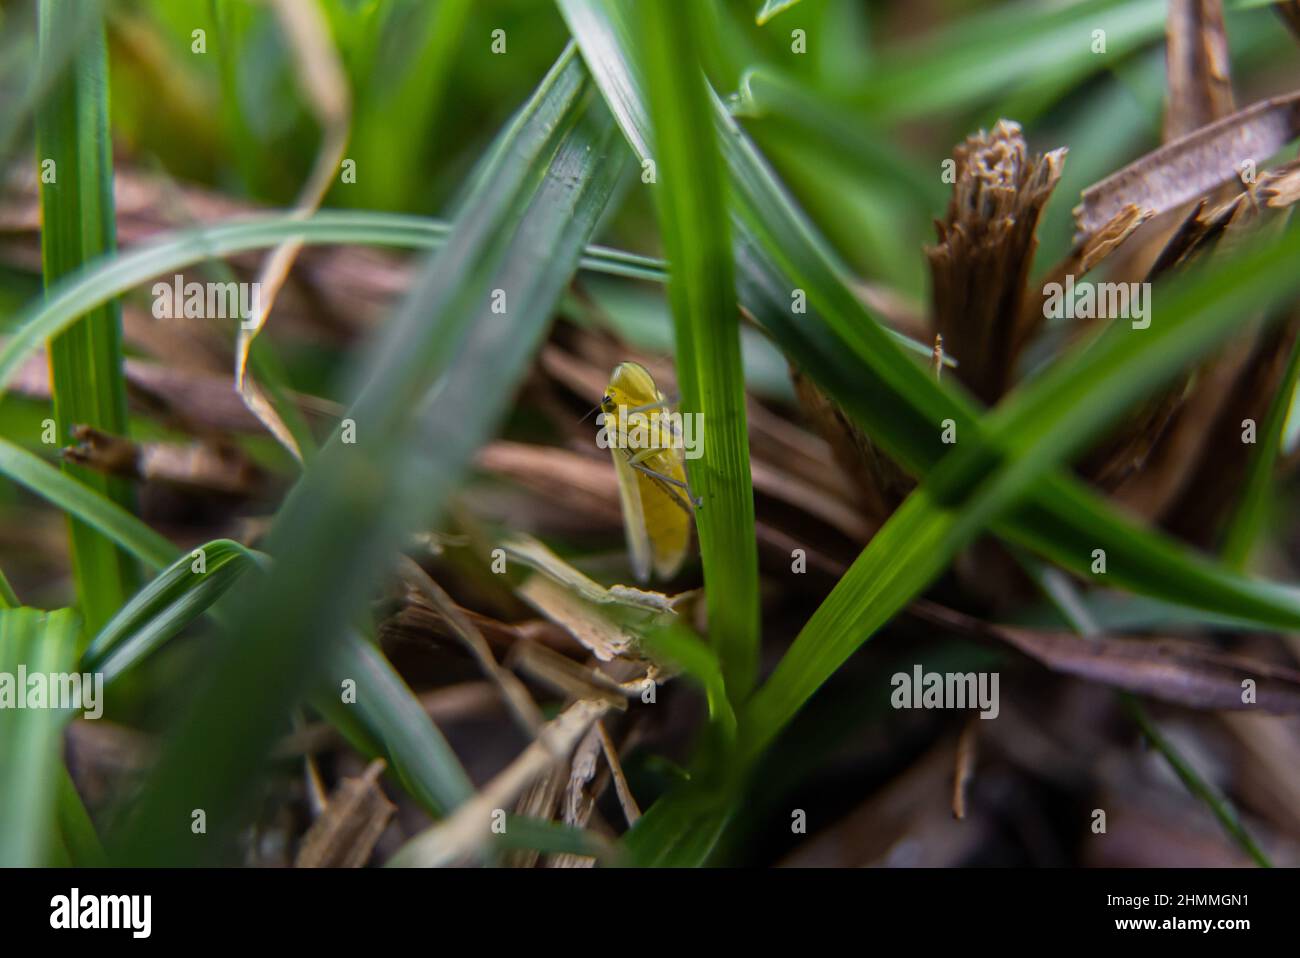 Closeup of an empoasca bug on plants Stock Photo